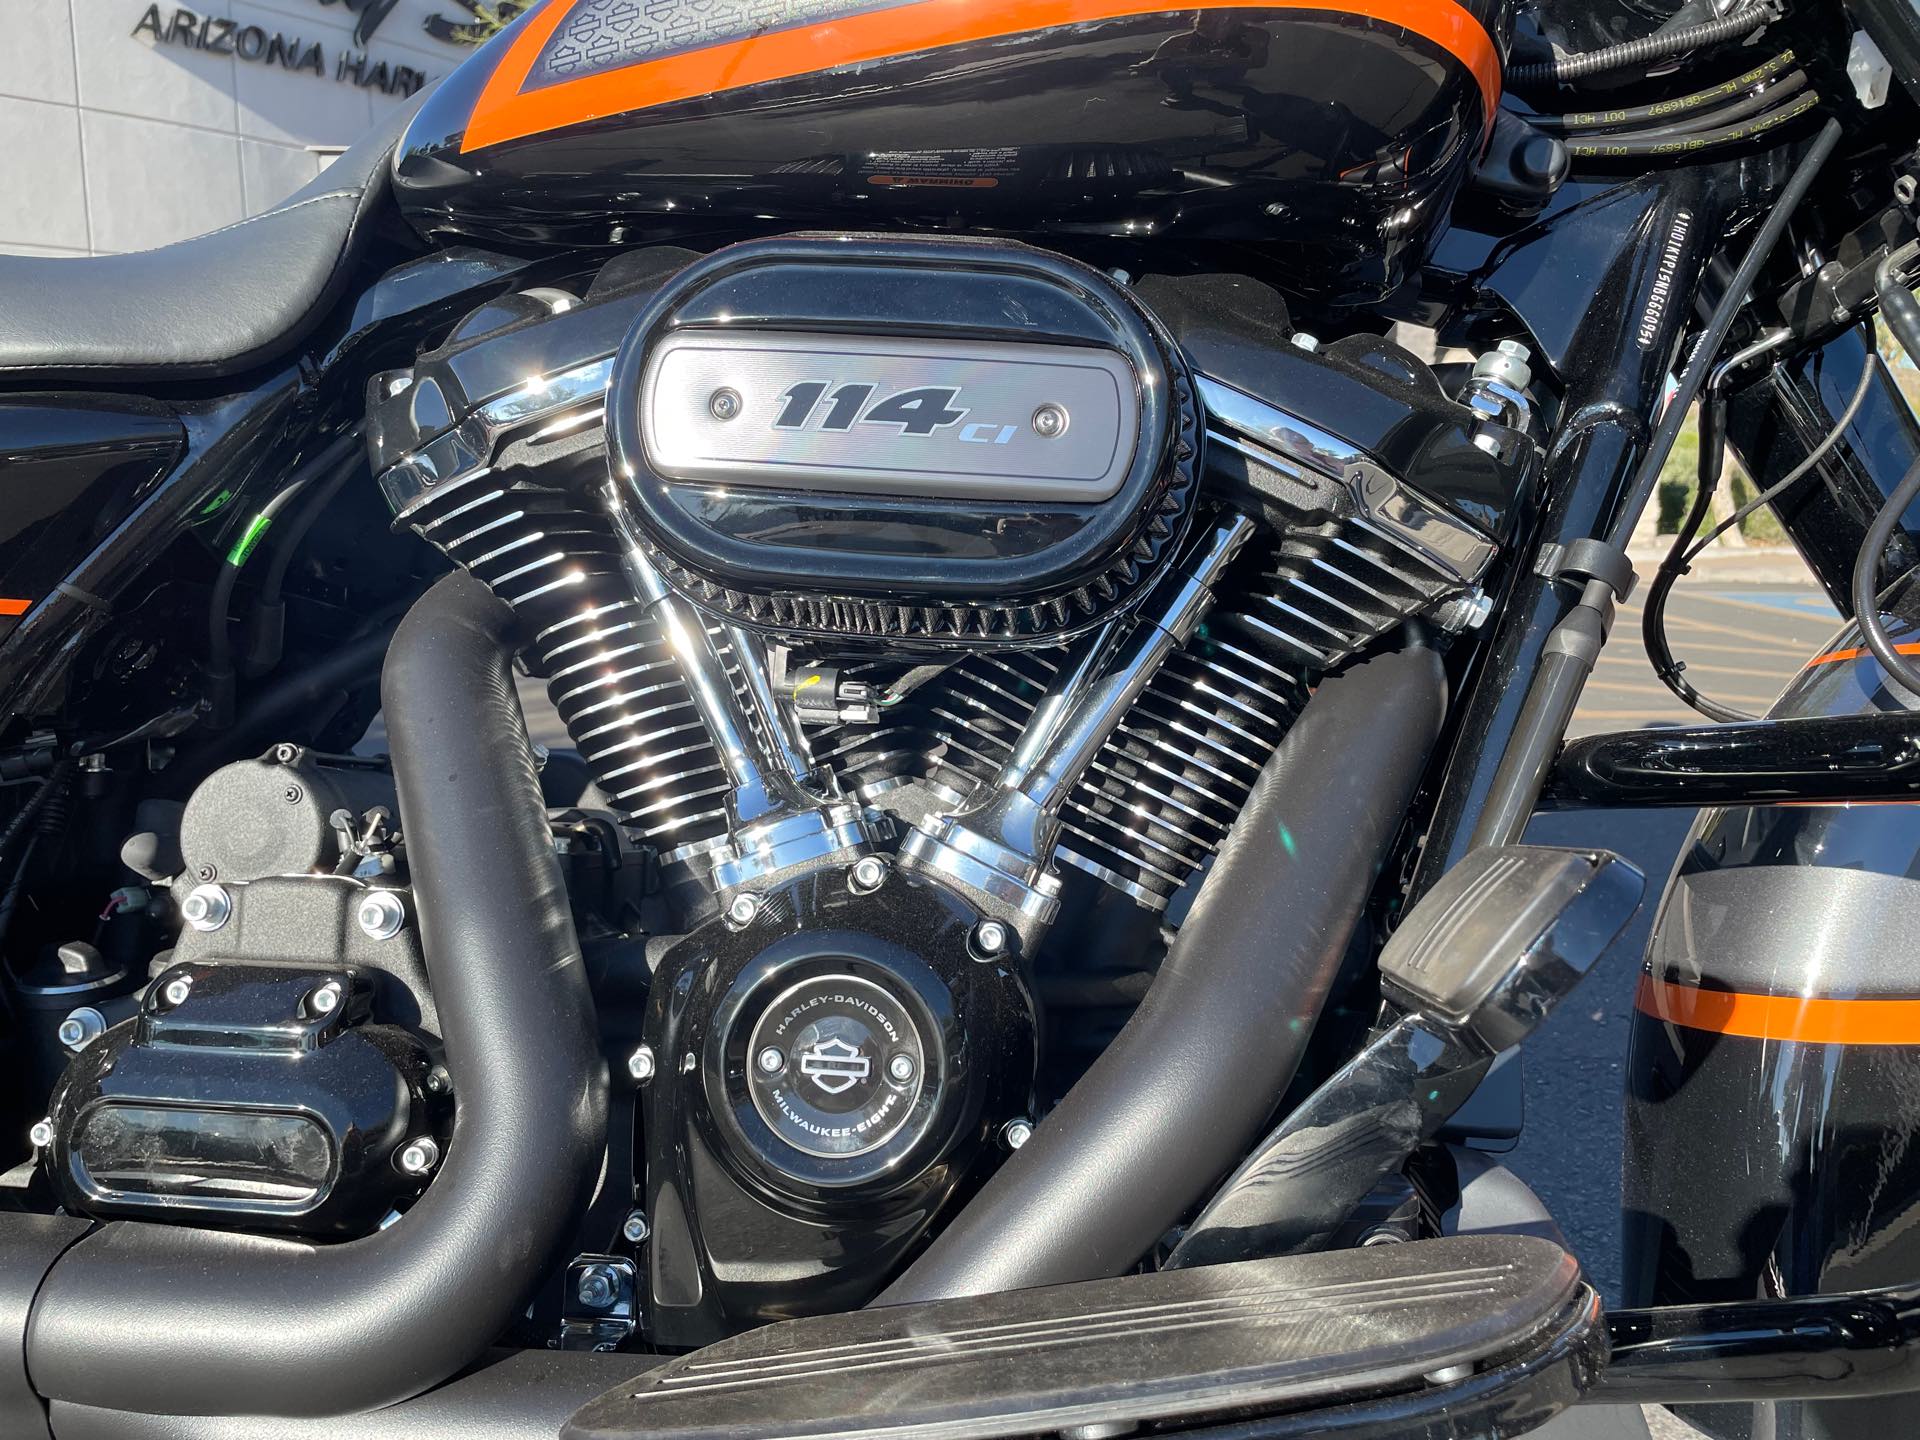 2022 Harley-Davidson Road King Special at Buddy Stubbs Arizona Harley-Davidson